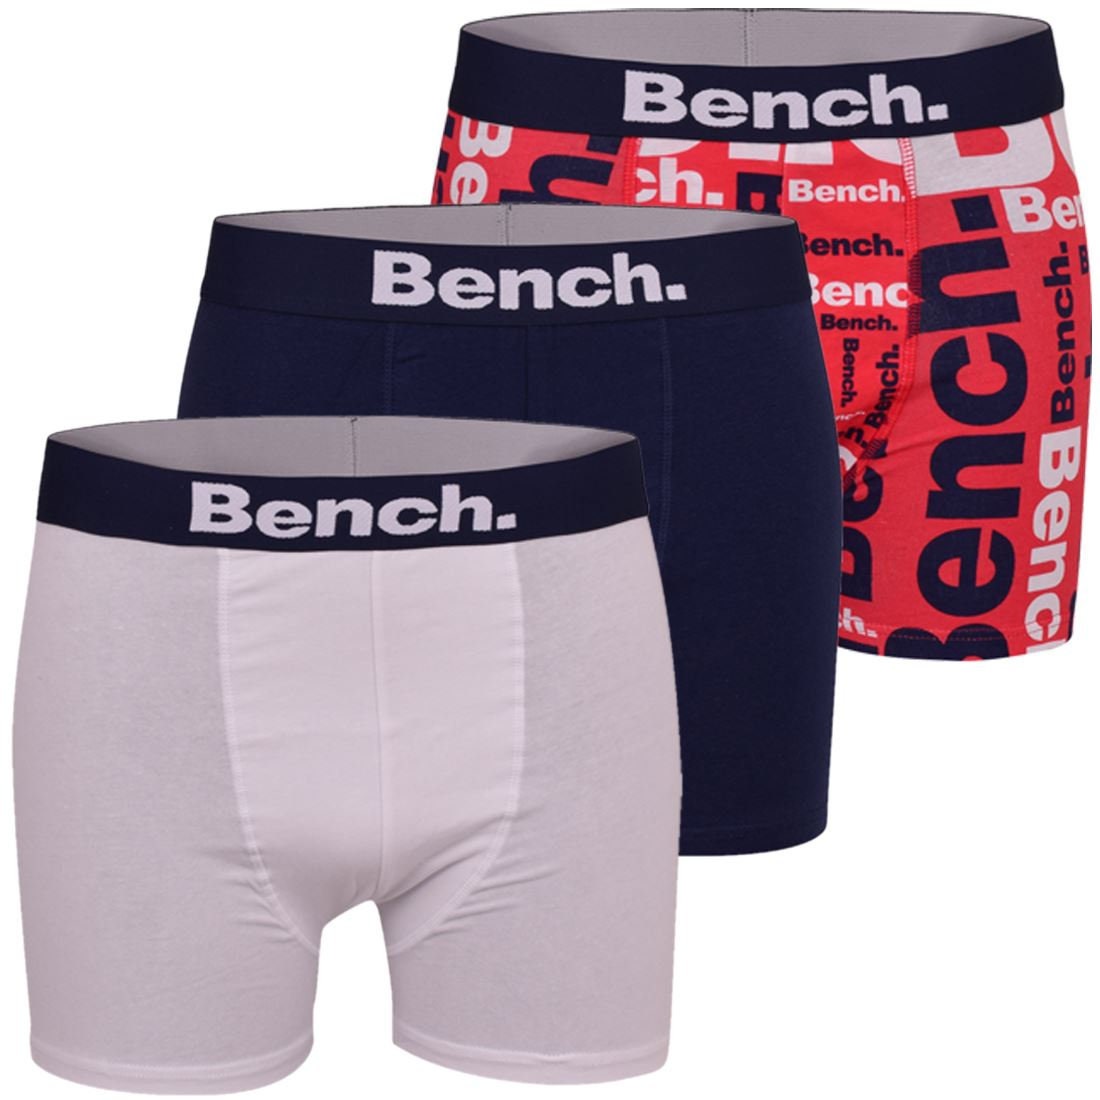 Bench. Underwear for Boy, Boxer Brief, 6 park, multi-color, cotton, Size M  to XL